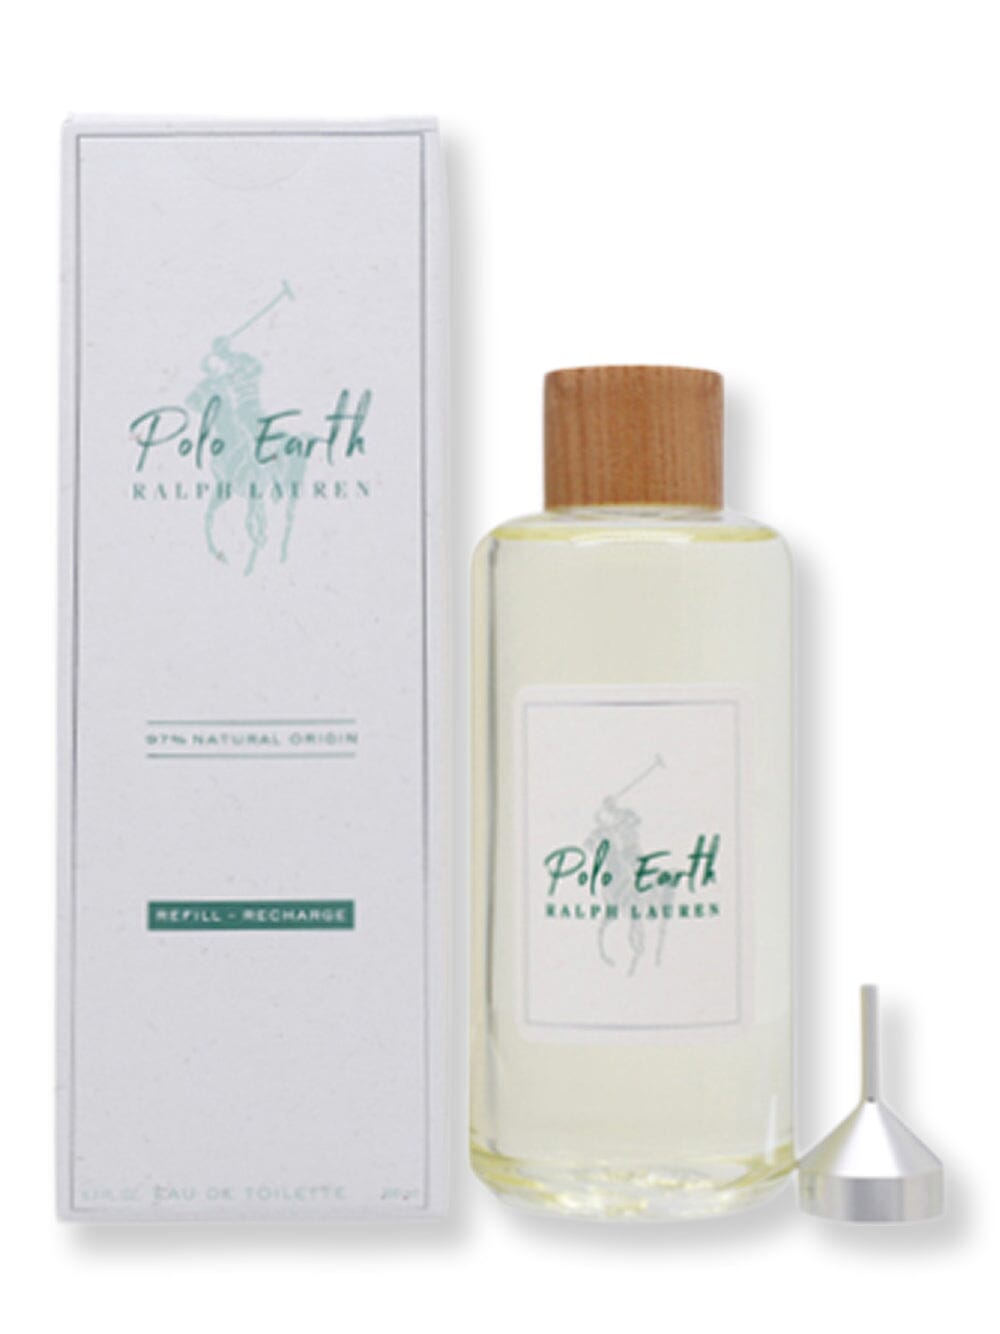 Ralph Lauren Ralph Lauren Polo Earth EDT Refill 6.7 oz200 ml Perfume 